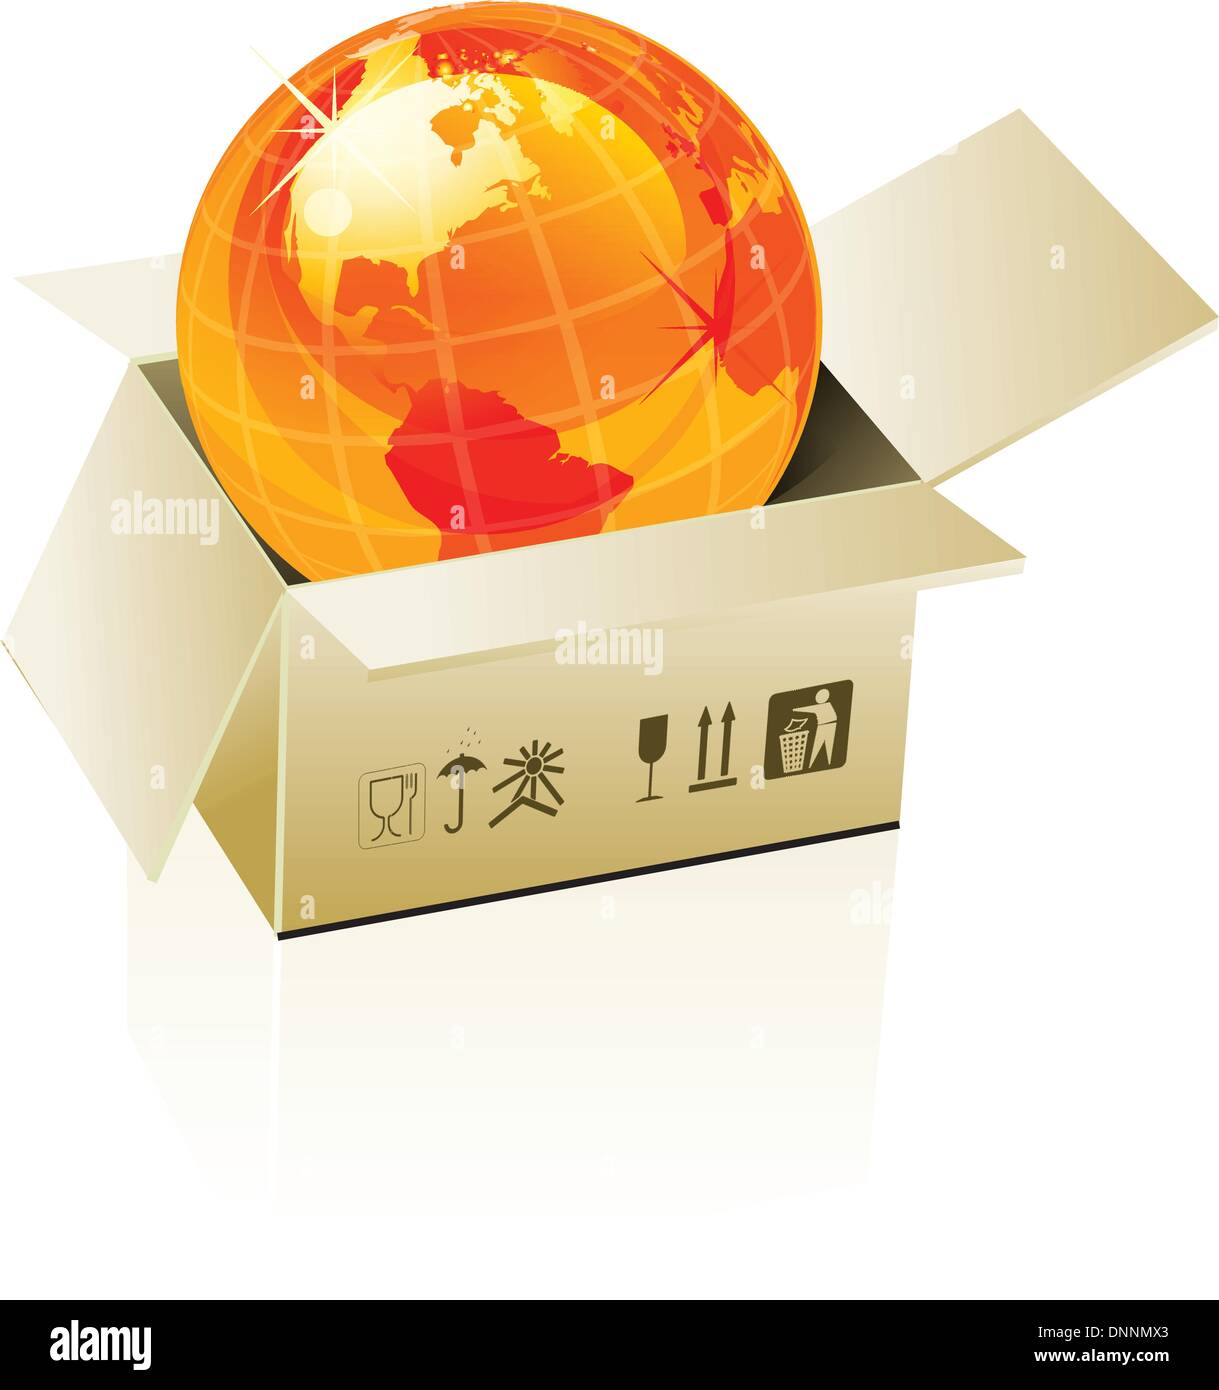 Earth globe in cardboard box on white background Stock Vector